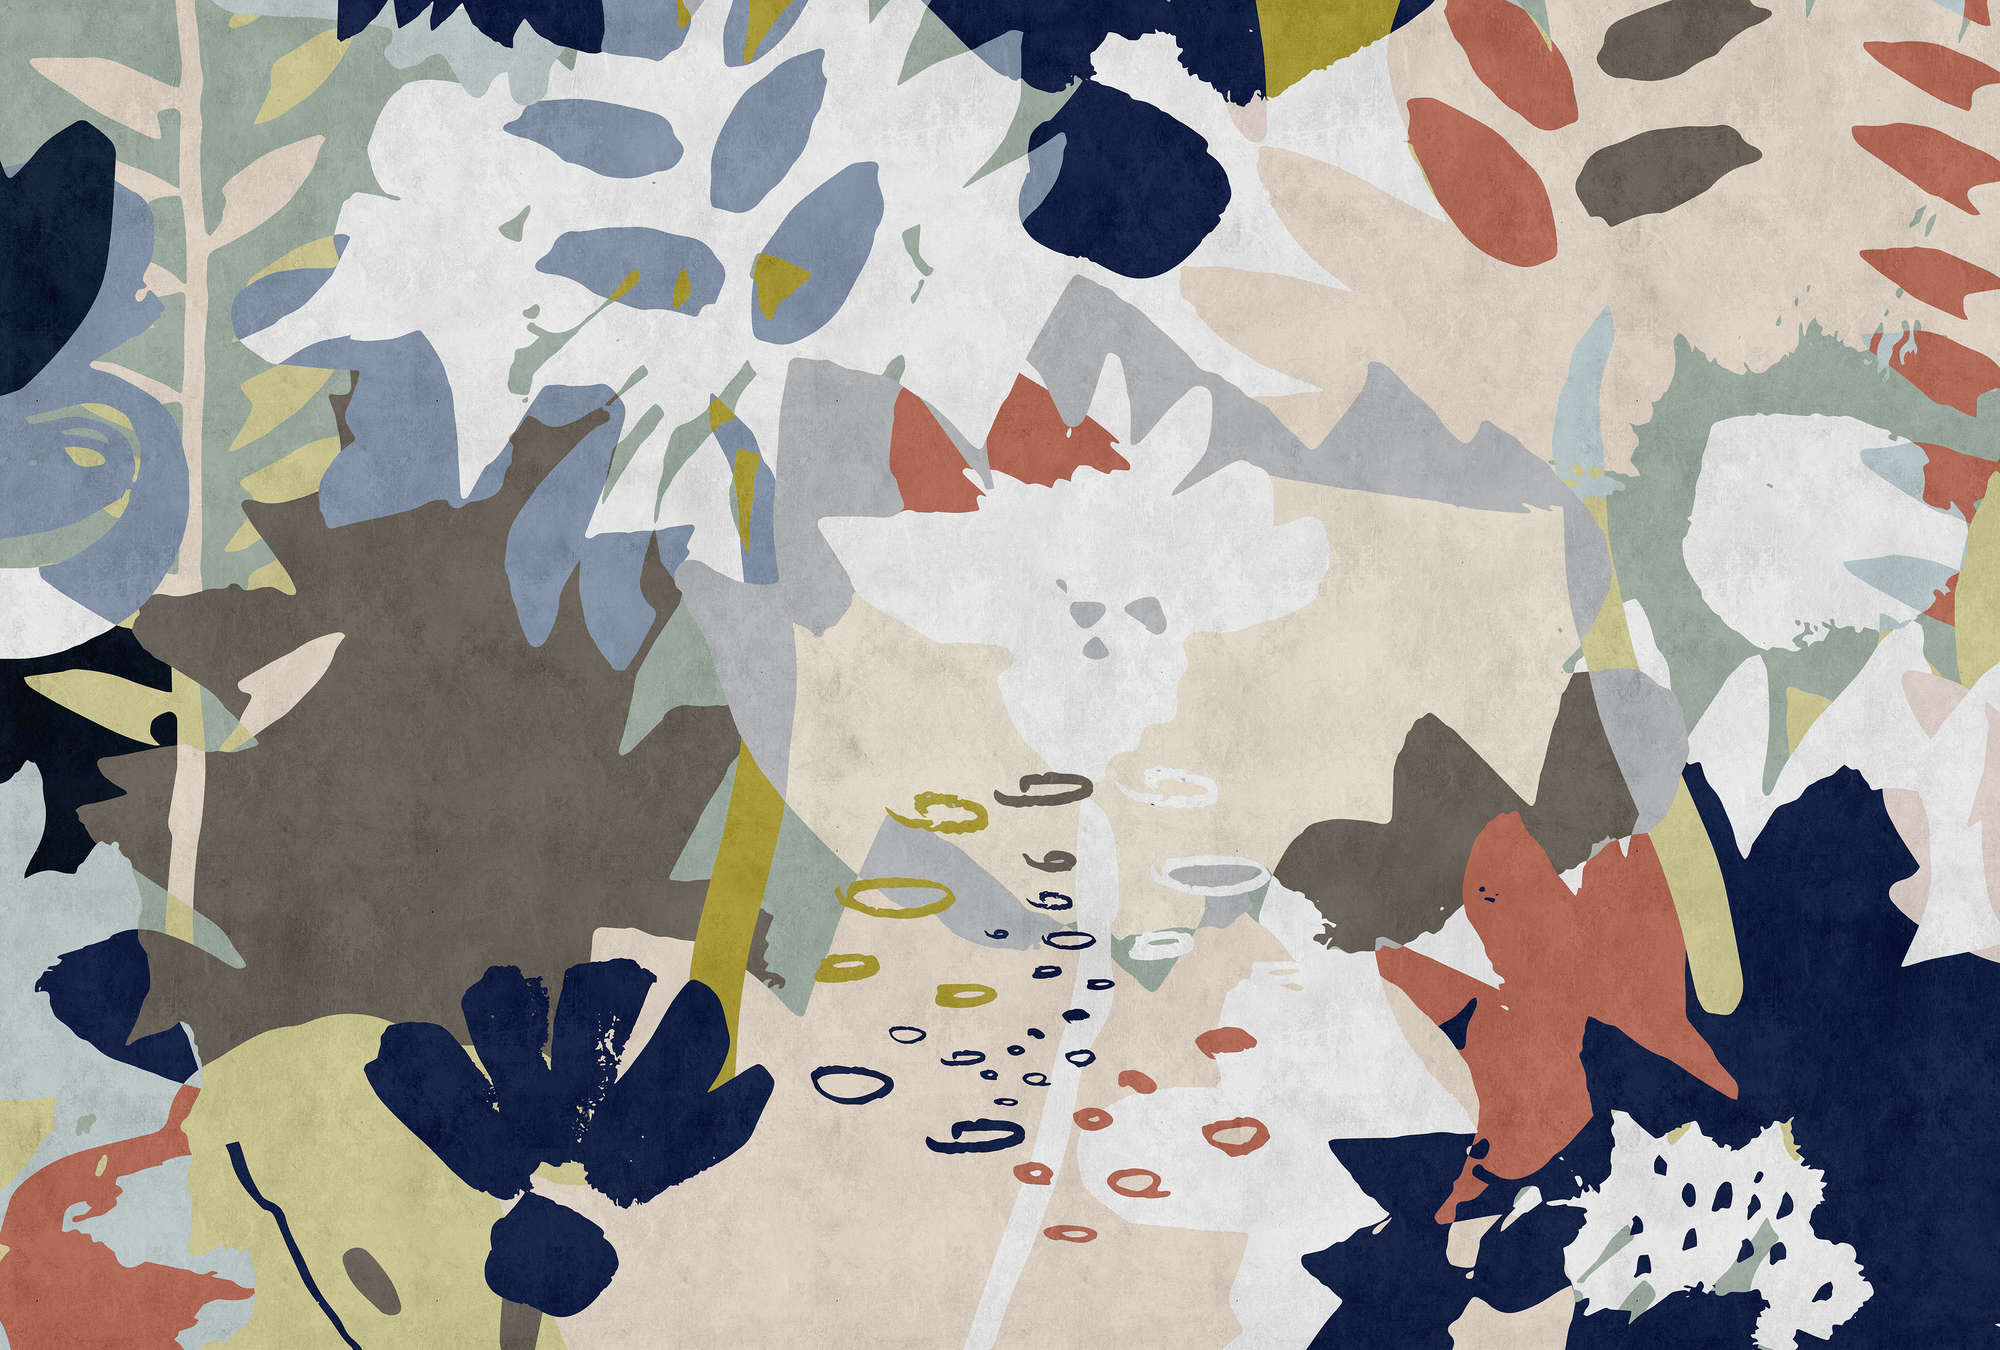             Collage Floral 4 - Fotomural con motivo de hojas de colores - estructura de papel secante - Azul, Marrón | Vellón liso Premium
        